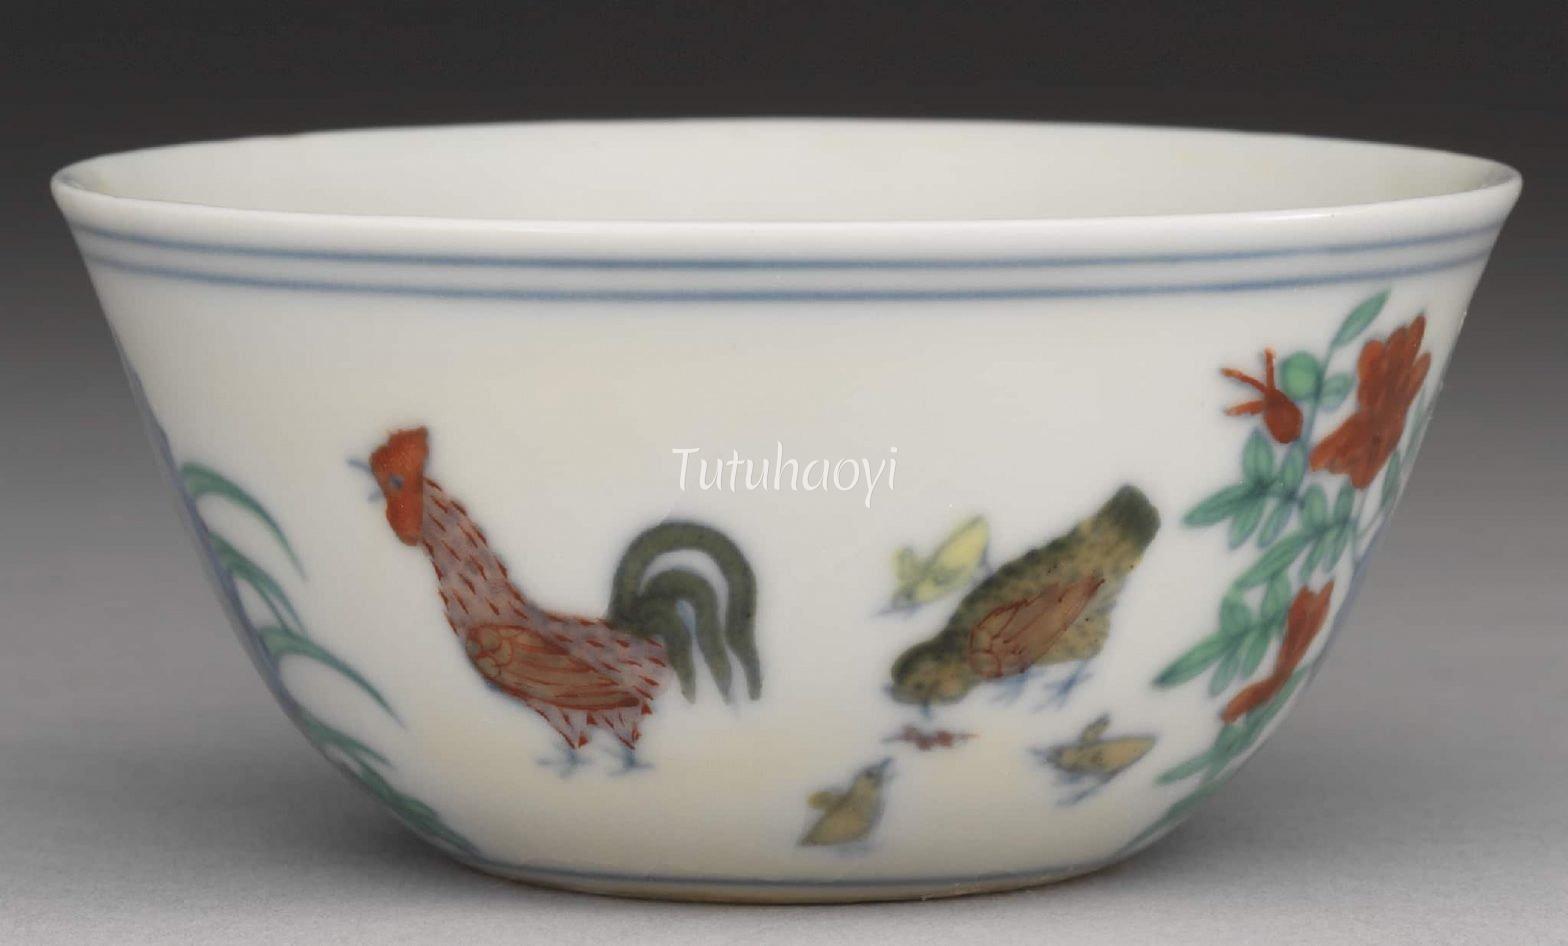 chicken cup Chenghua Tutuhaoyi